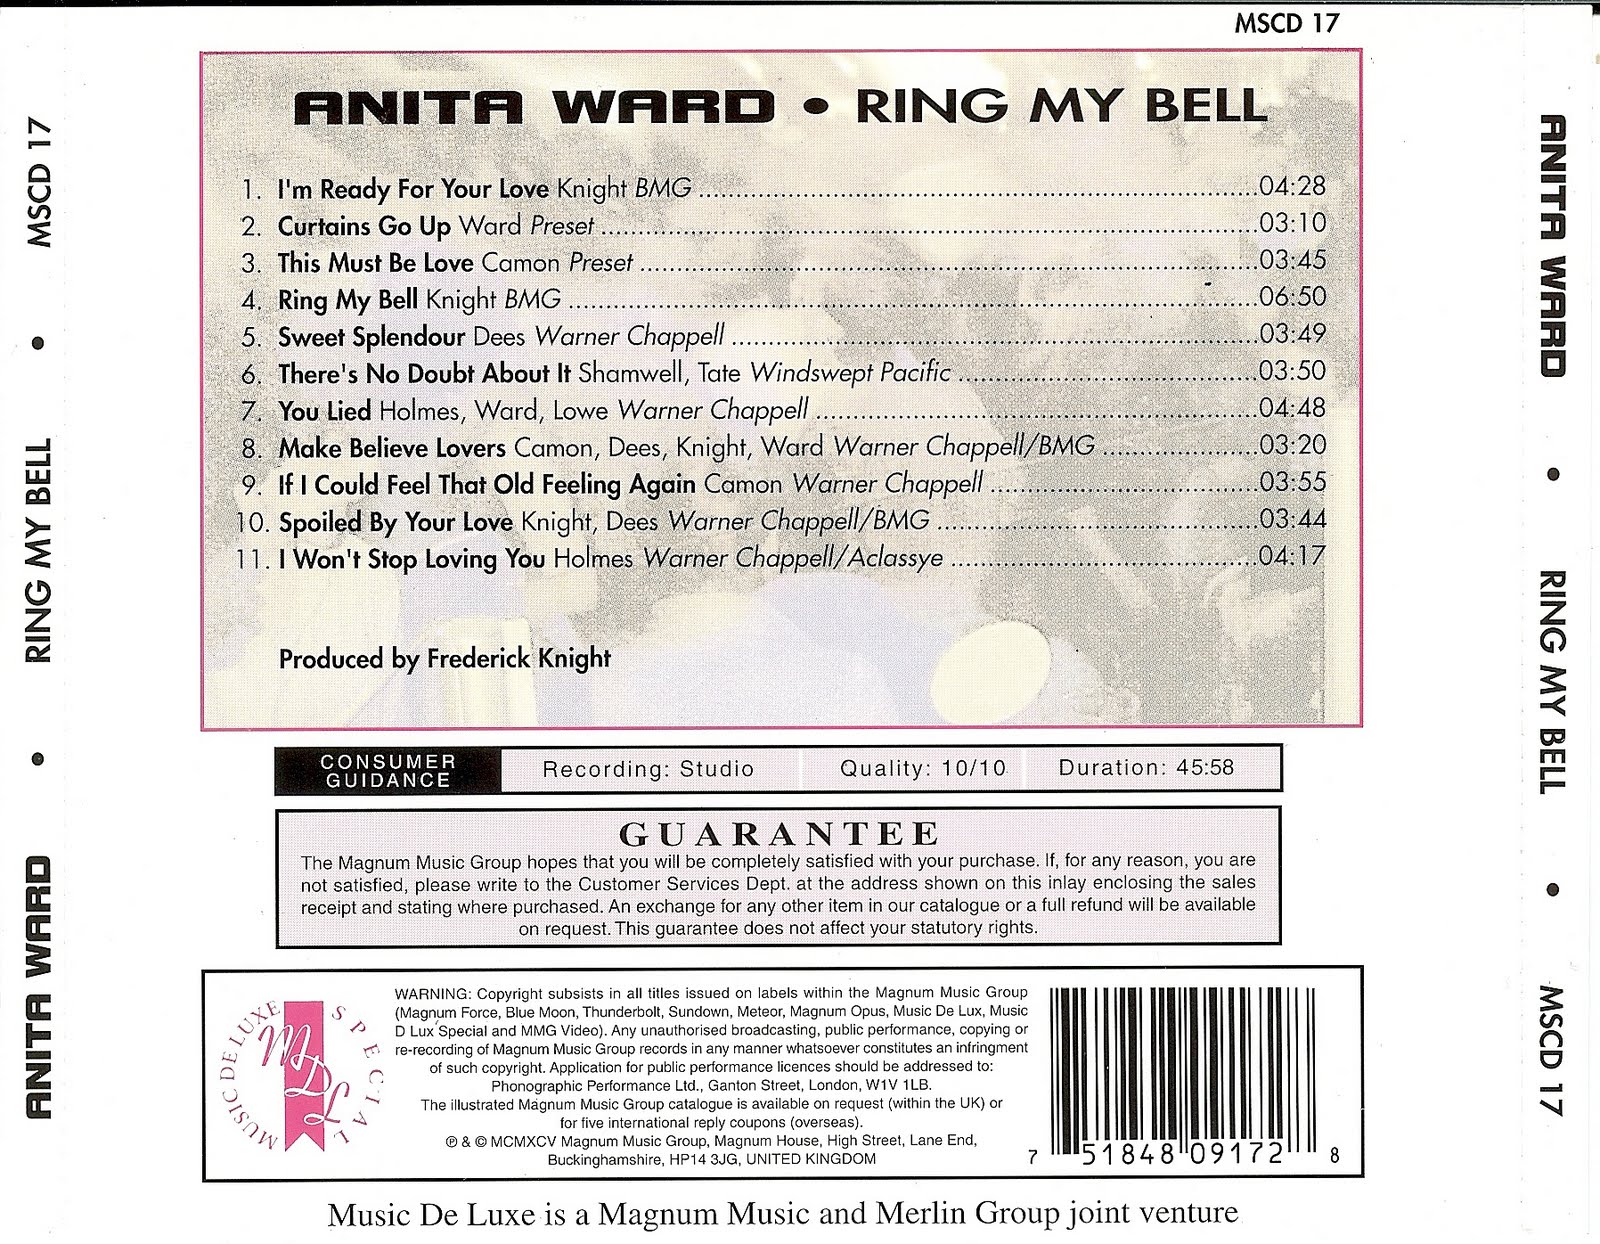 Anita Ward Ring my Bell. Ring my Bells перевод. Ring my Bell Manga. Anita Ward - Ring my Bell в каком альбоме. Перевод песни ring